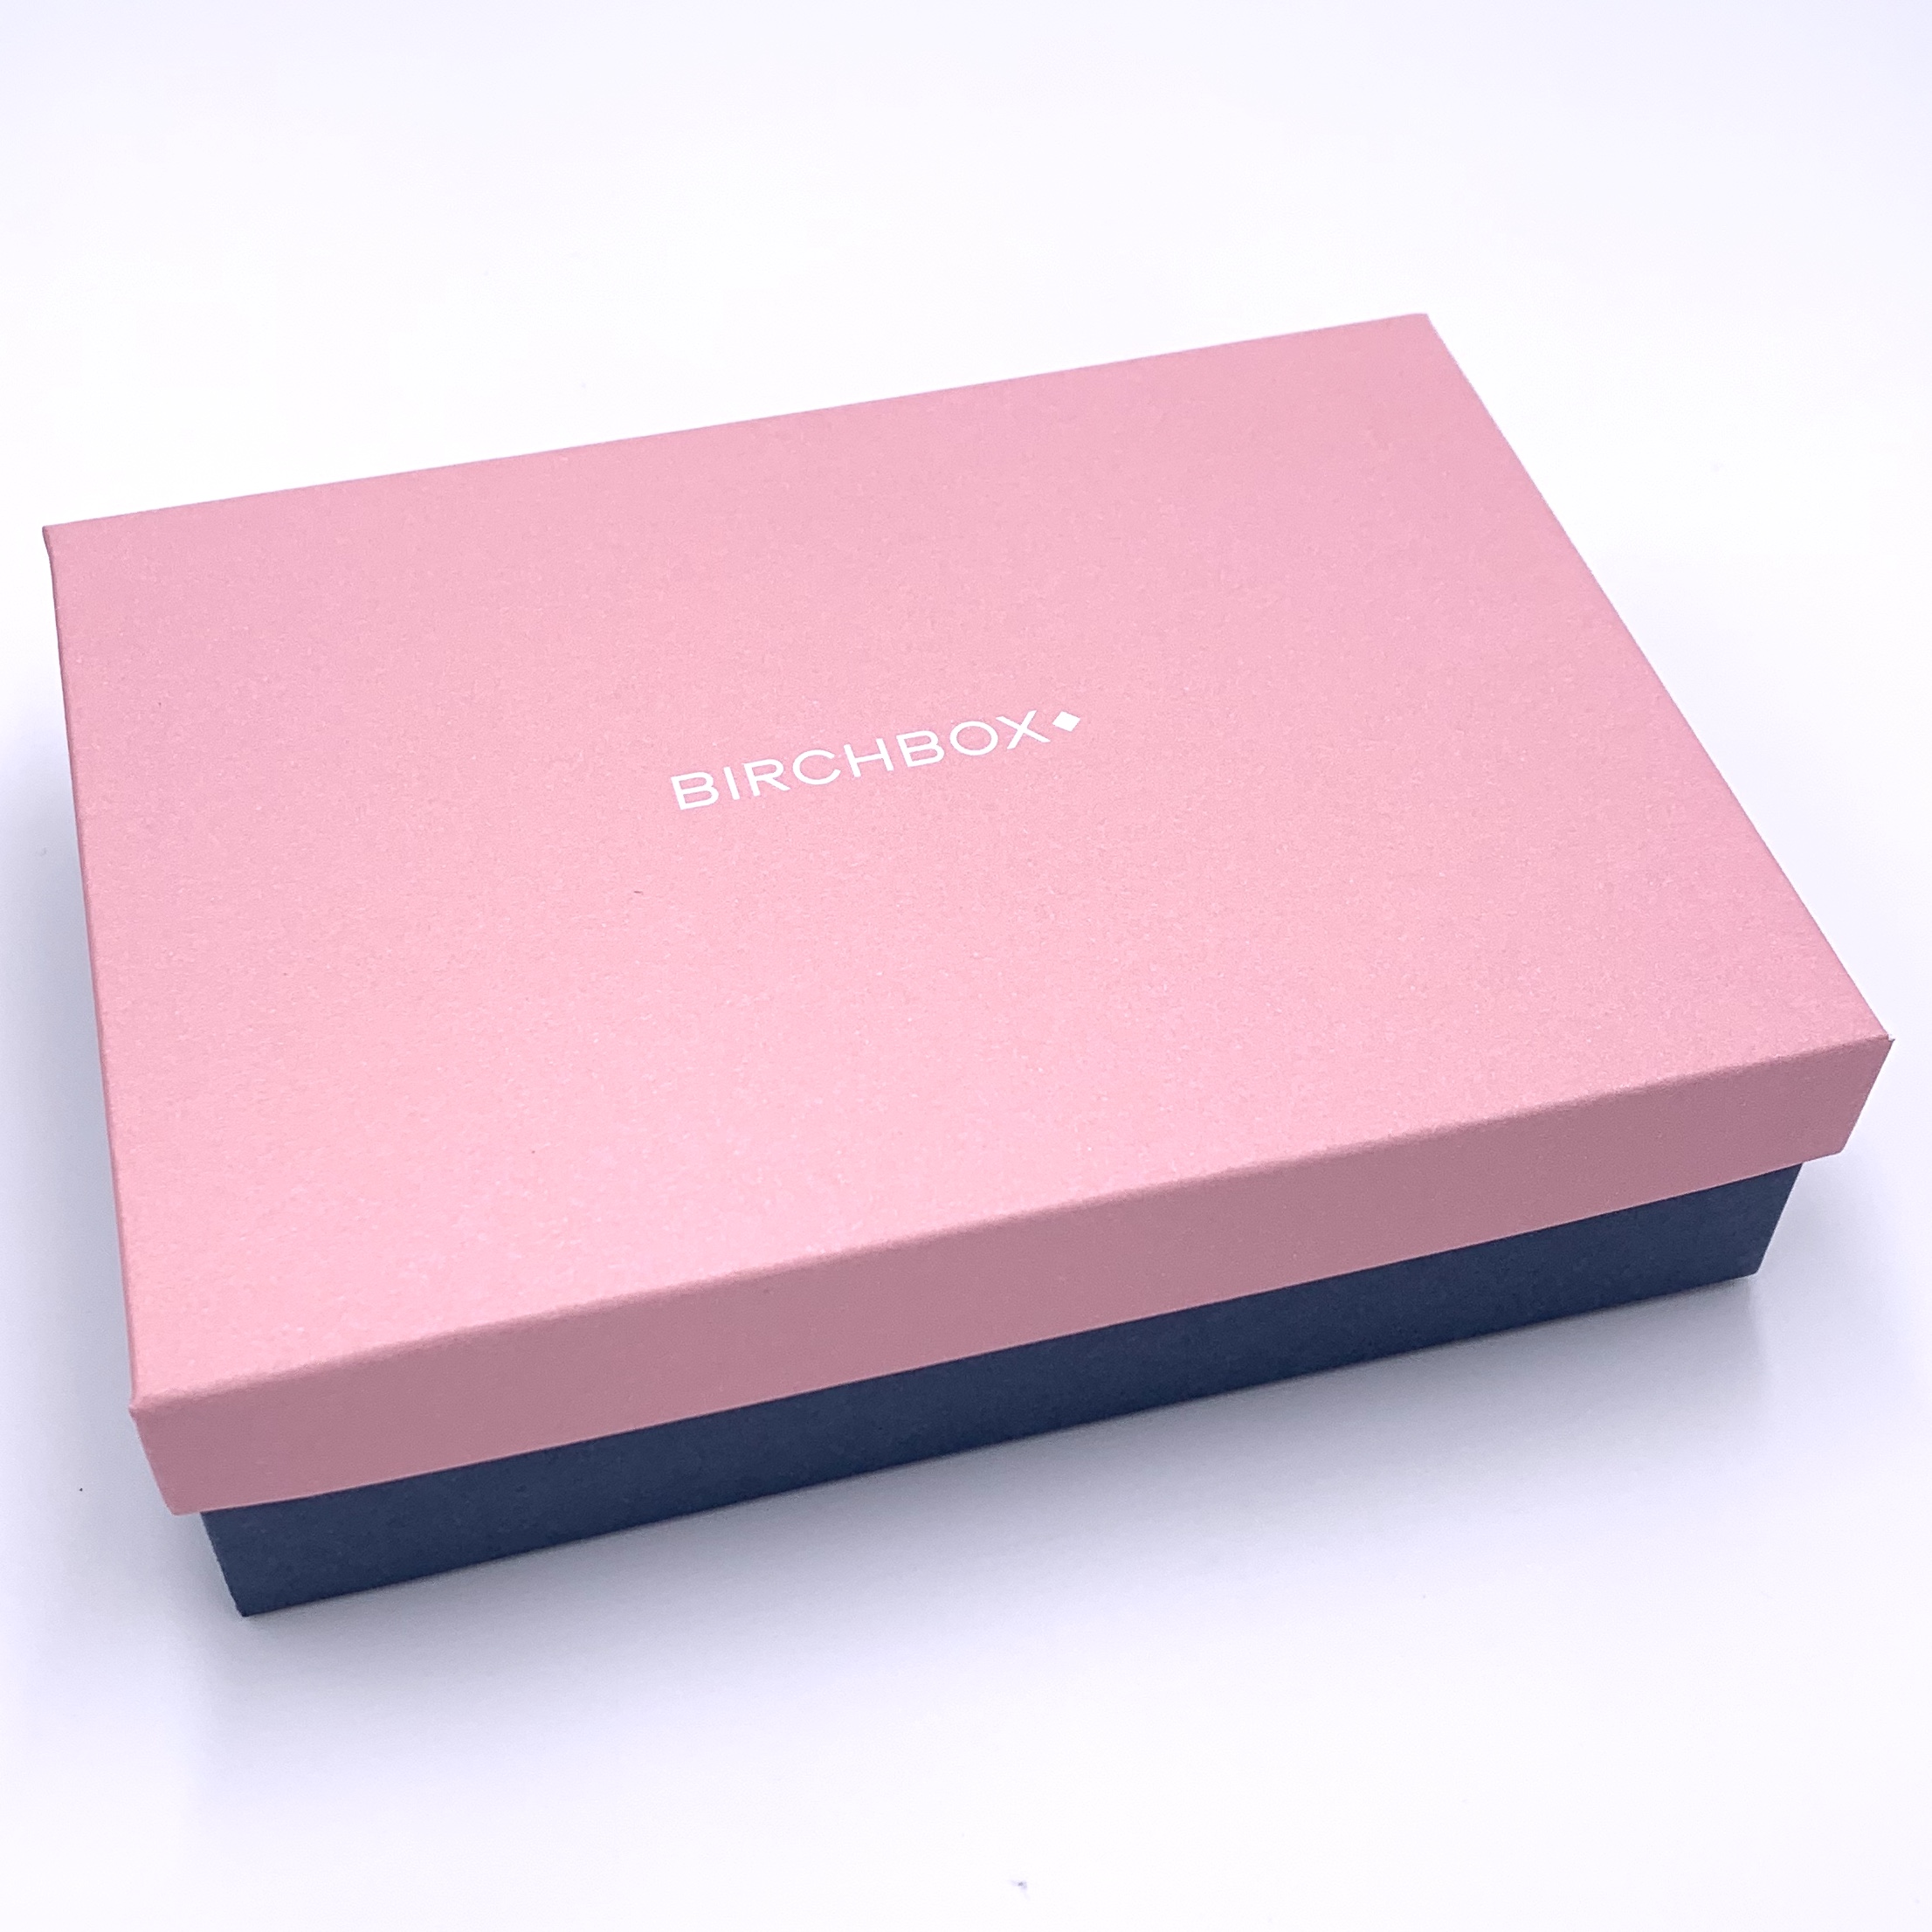 Box for Birchbox July 2020